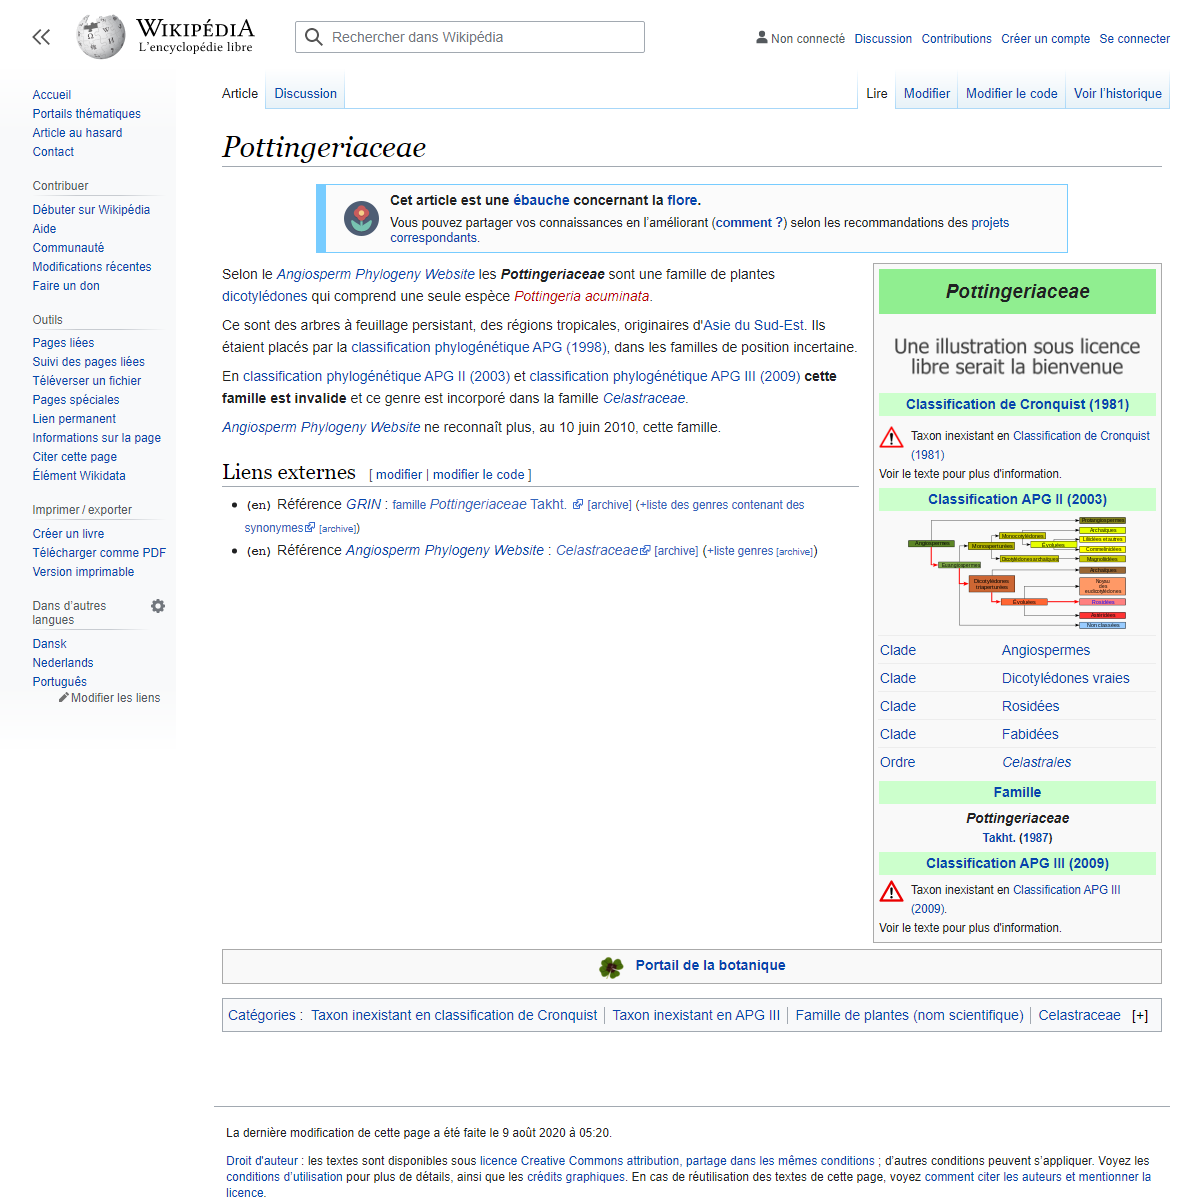 A complete backup of https://fr.wikipedia.org/wiki/Pottingeriaceae